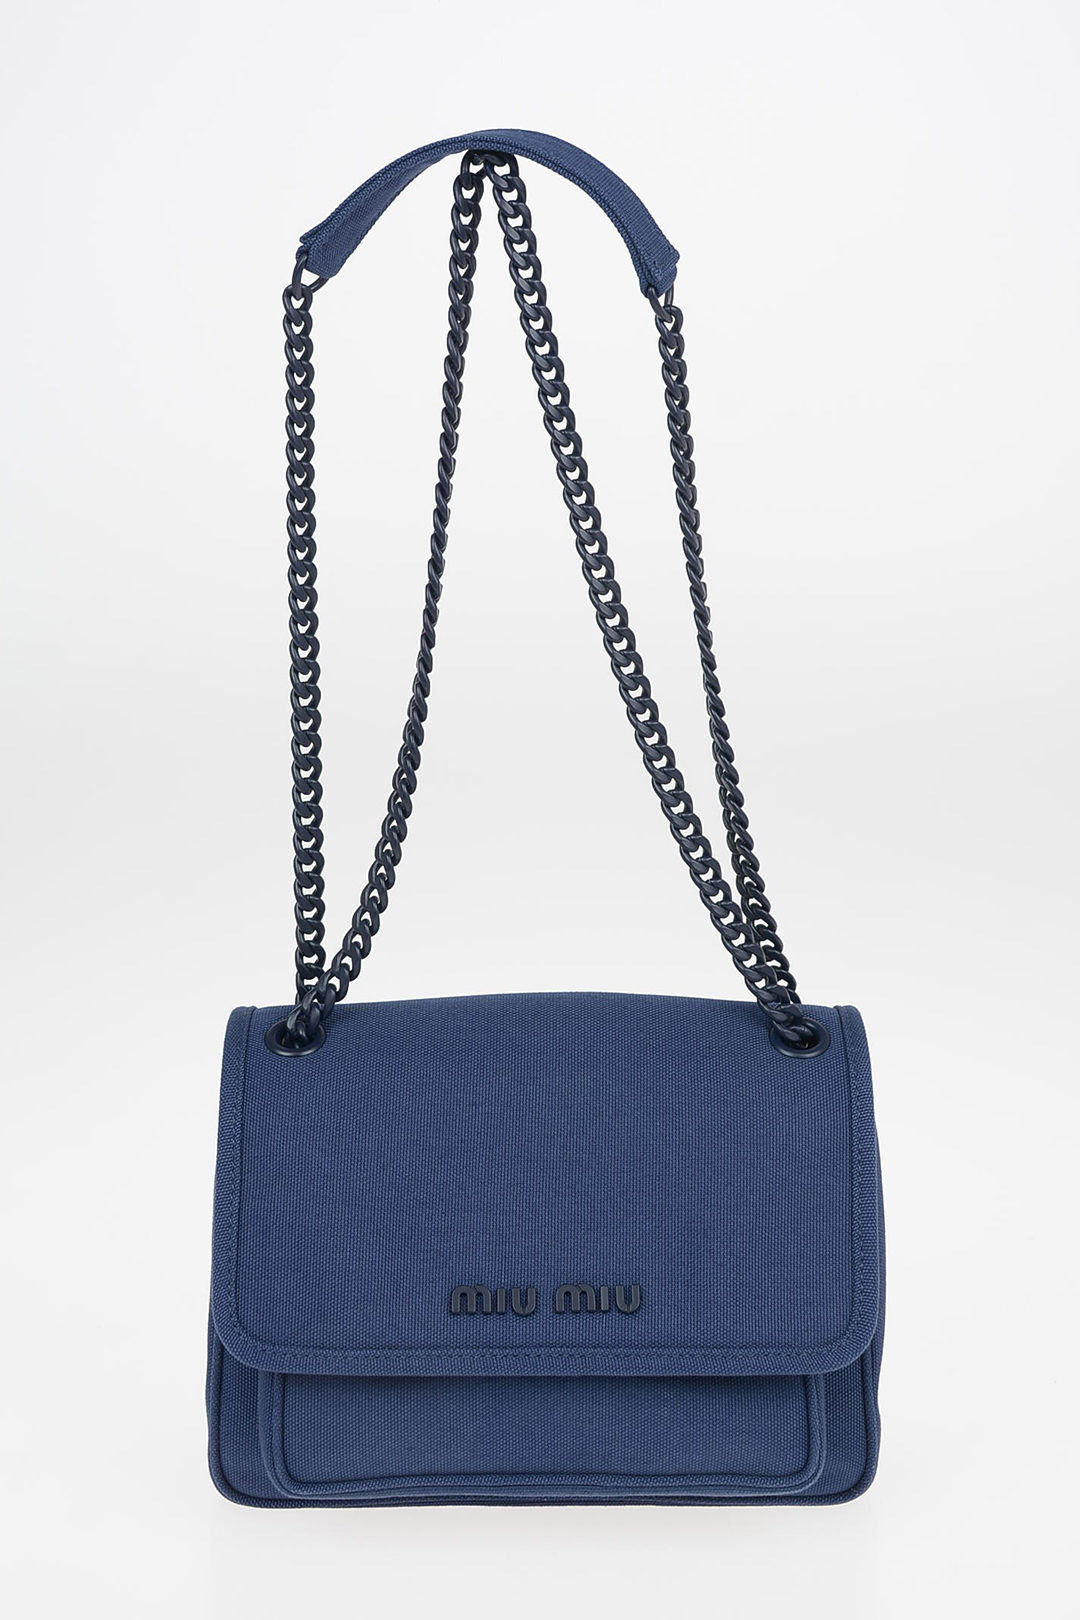 Miu Miu Chain-Link Crossbody Bag